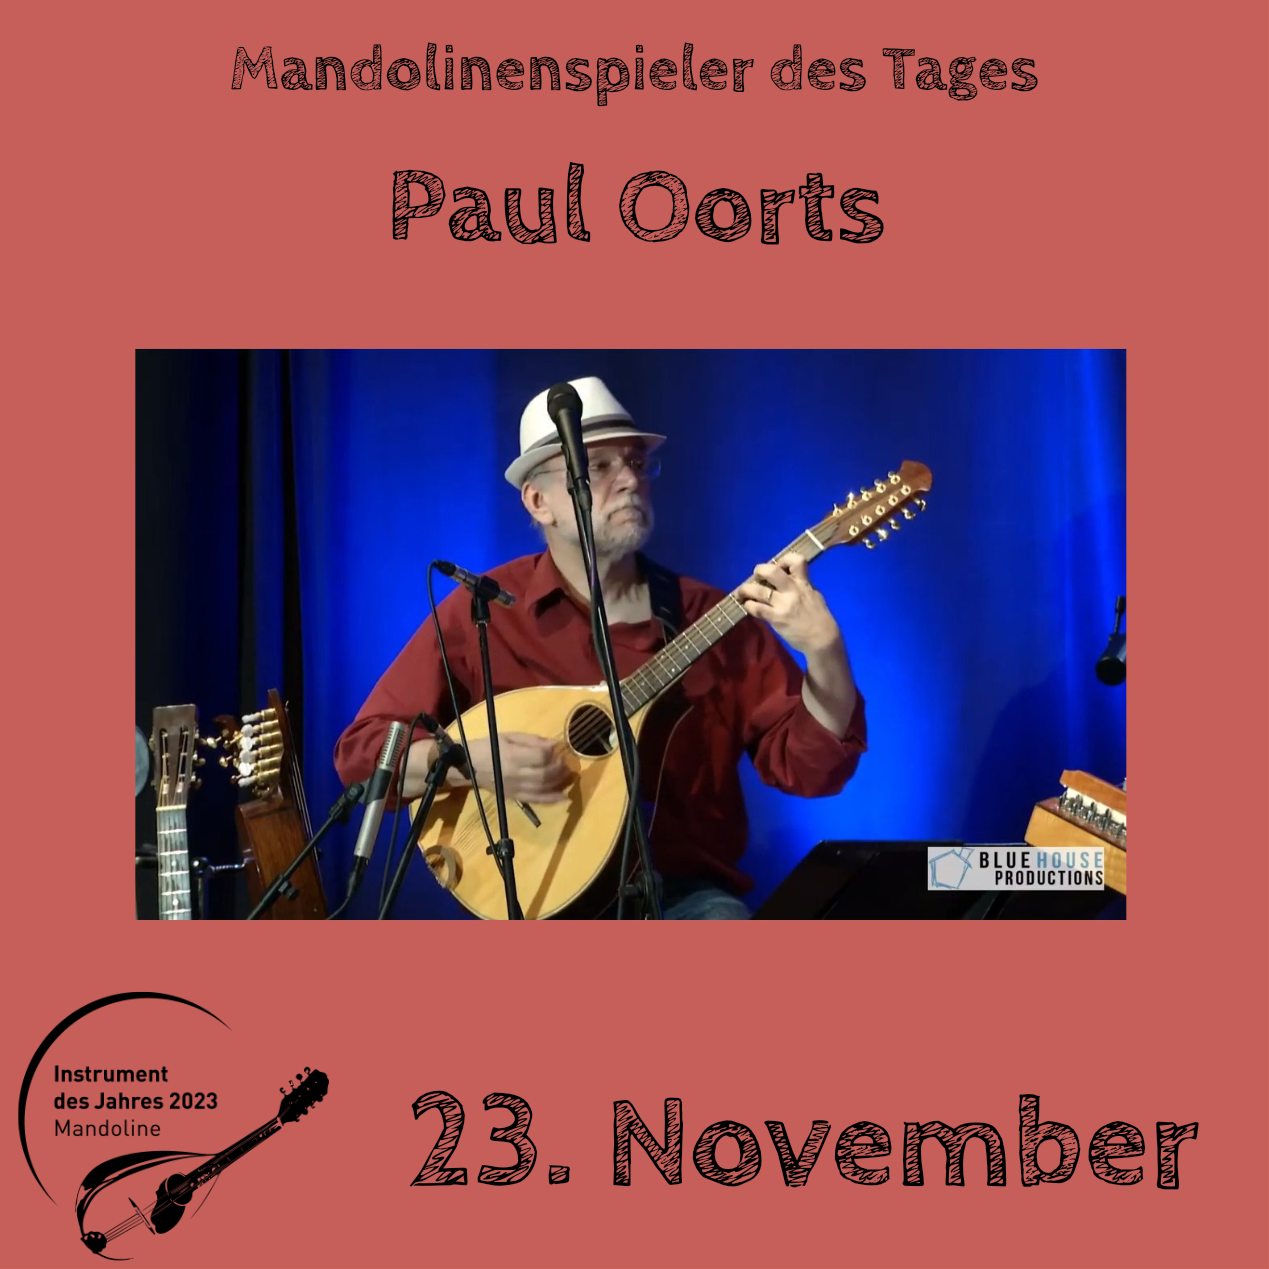 23. November - Paul Oorts Instrument des Jahres 2023 Mandolinenspieler Mandolinenspielerin des Tages